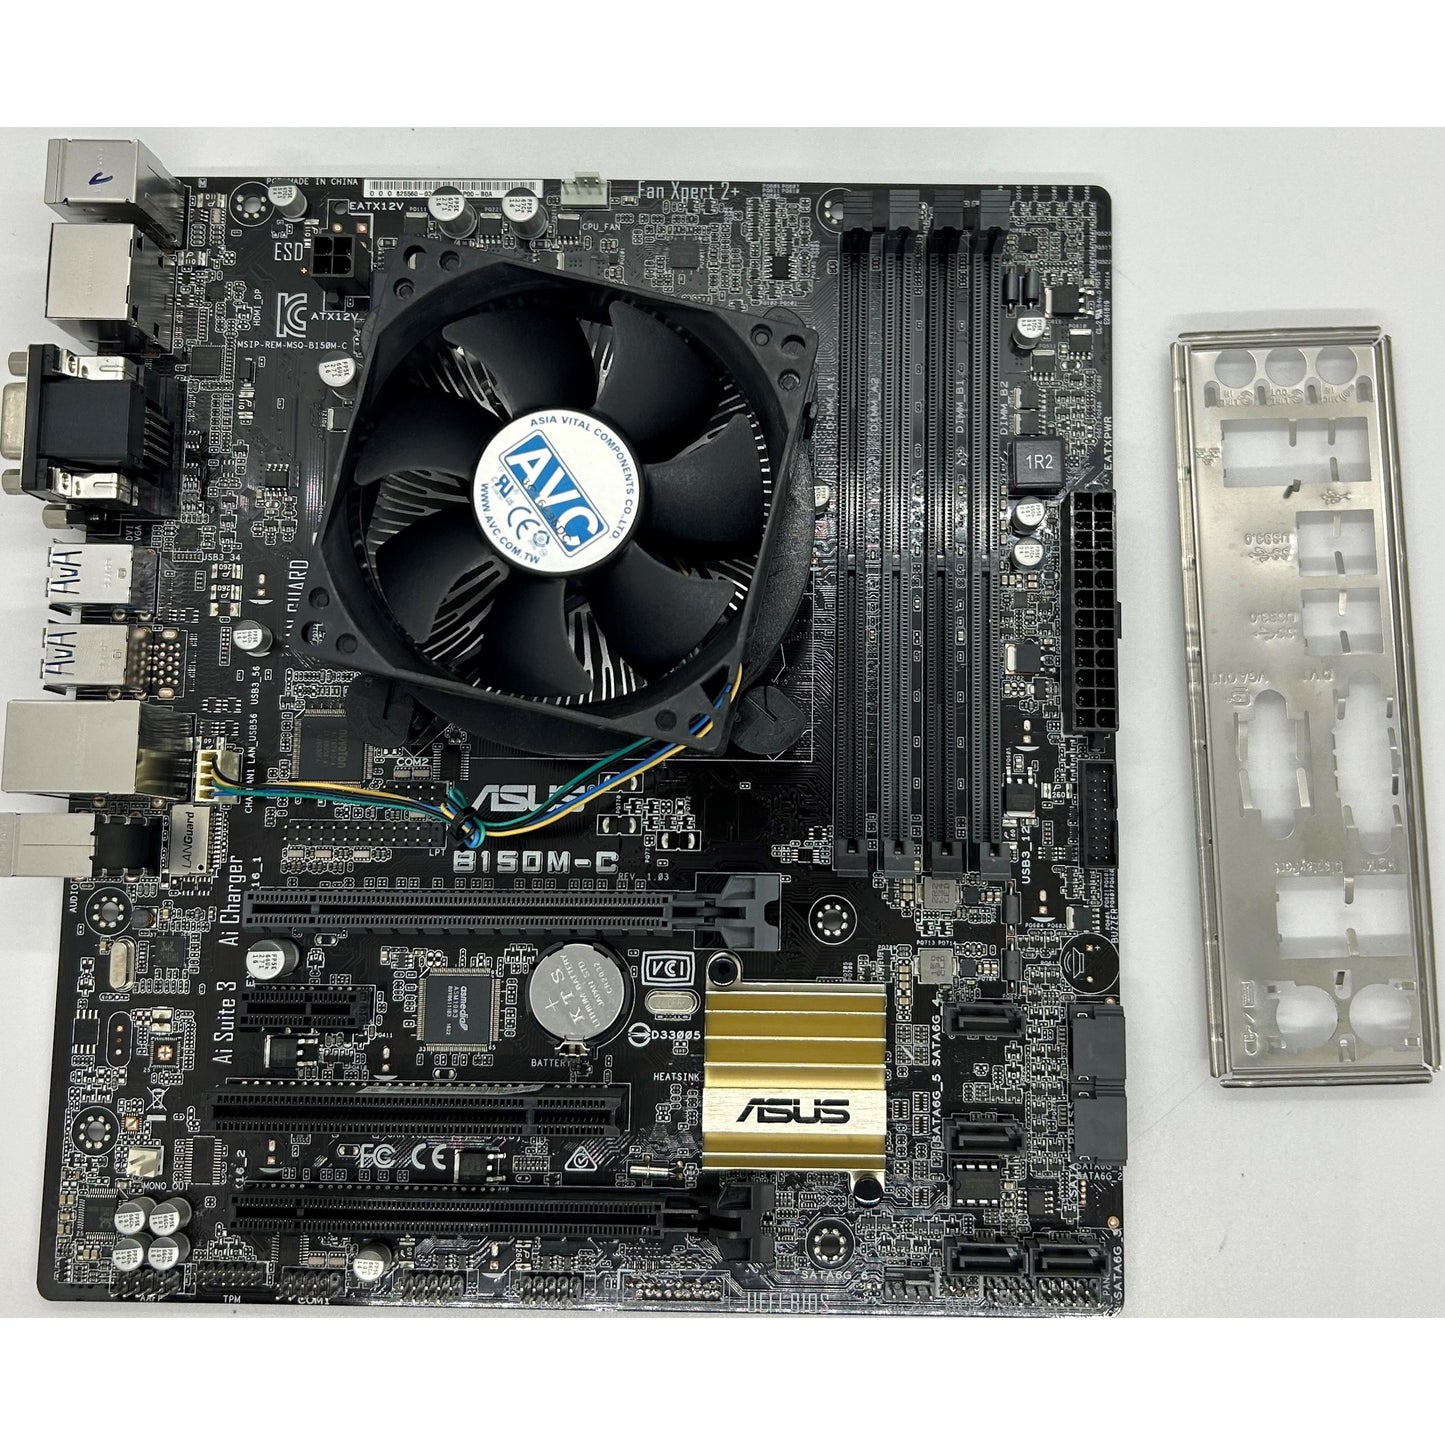 Upgrade Bundle |  ASUS B150M-C & Intel Core i5 6400 | 4 - 32 GB RAM